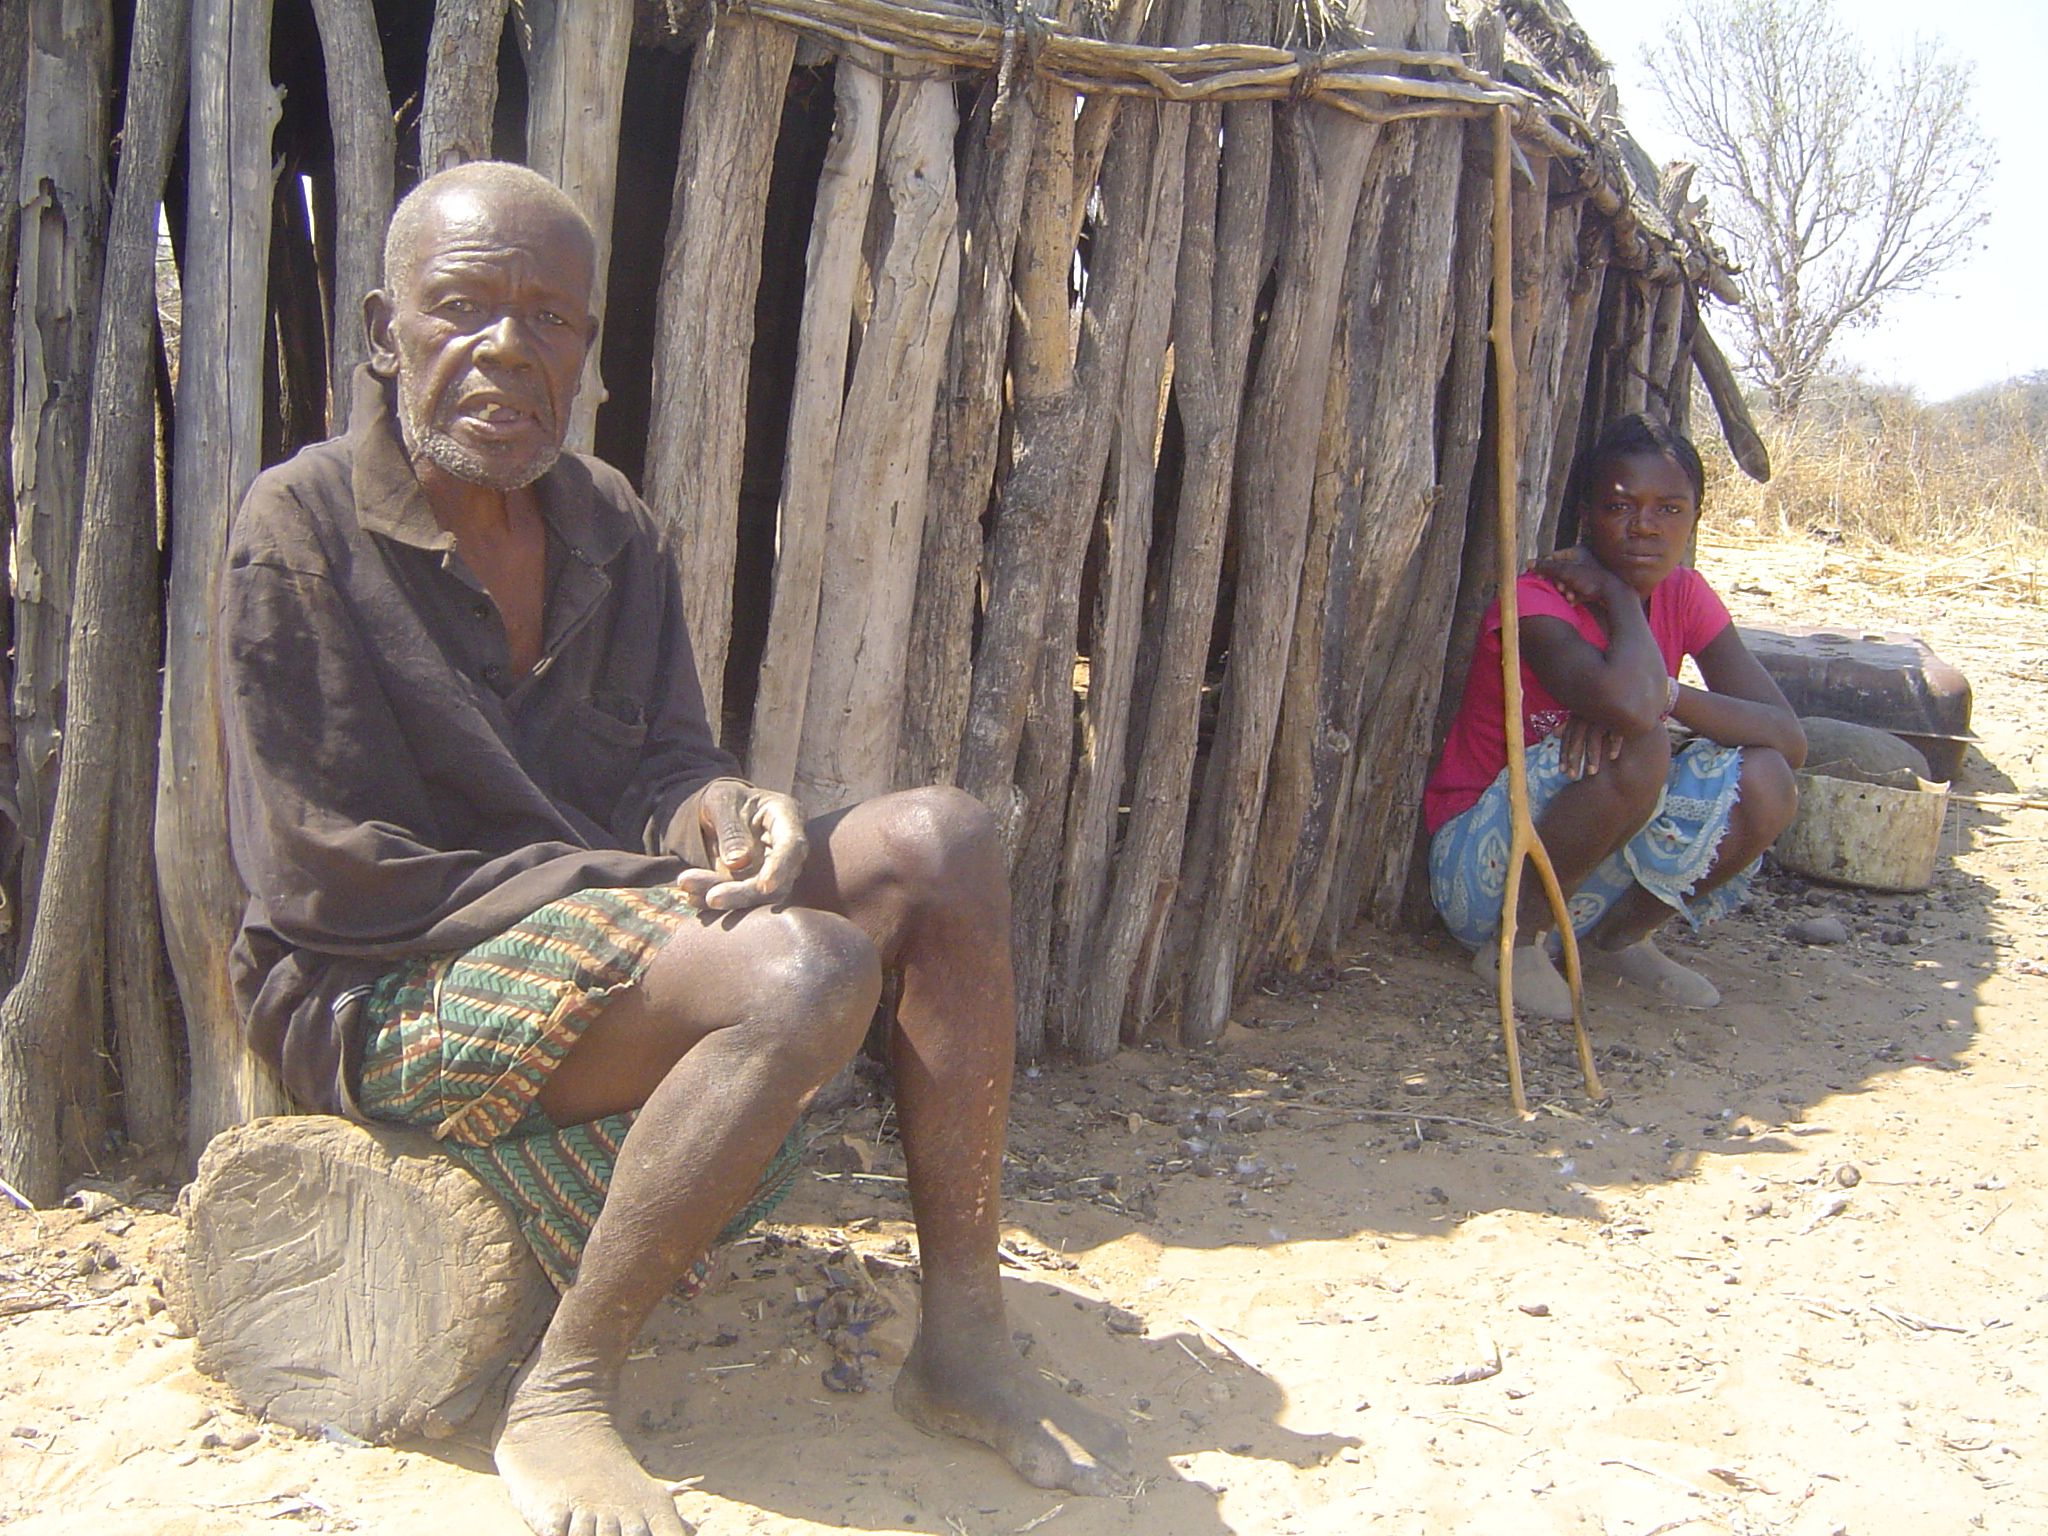 Matkrisen i Angola drabbar de svagaste allra hårdast: åldringar